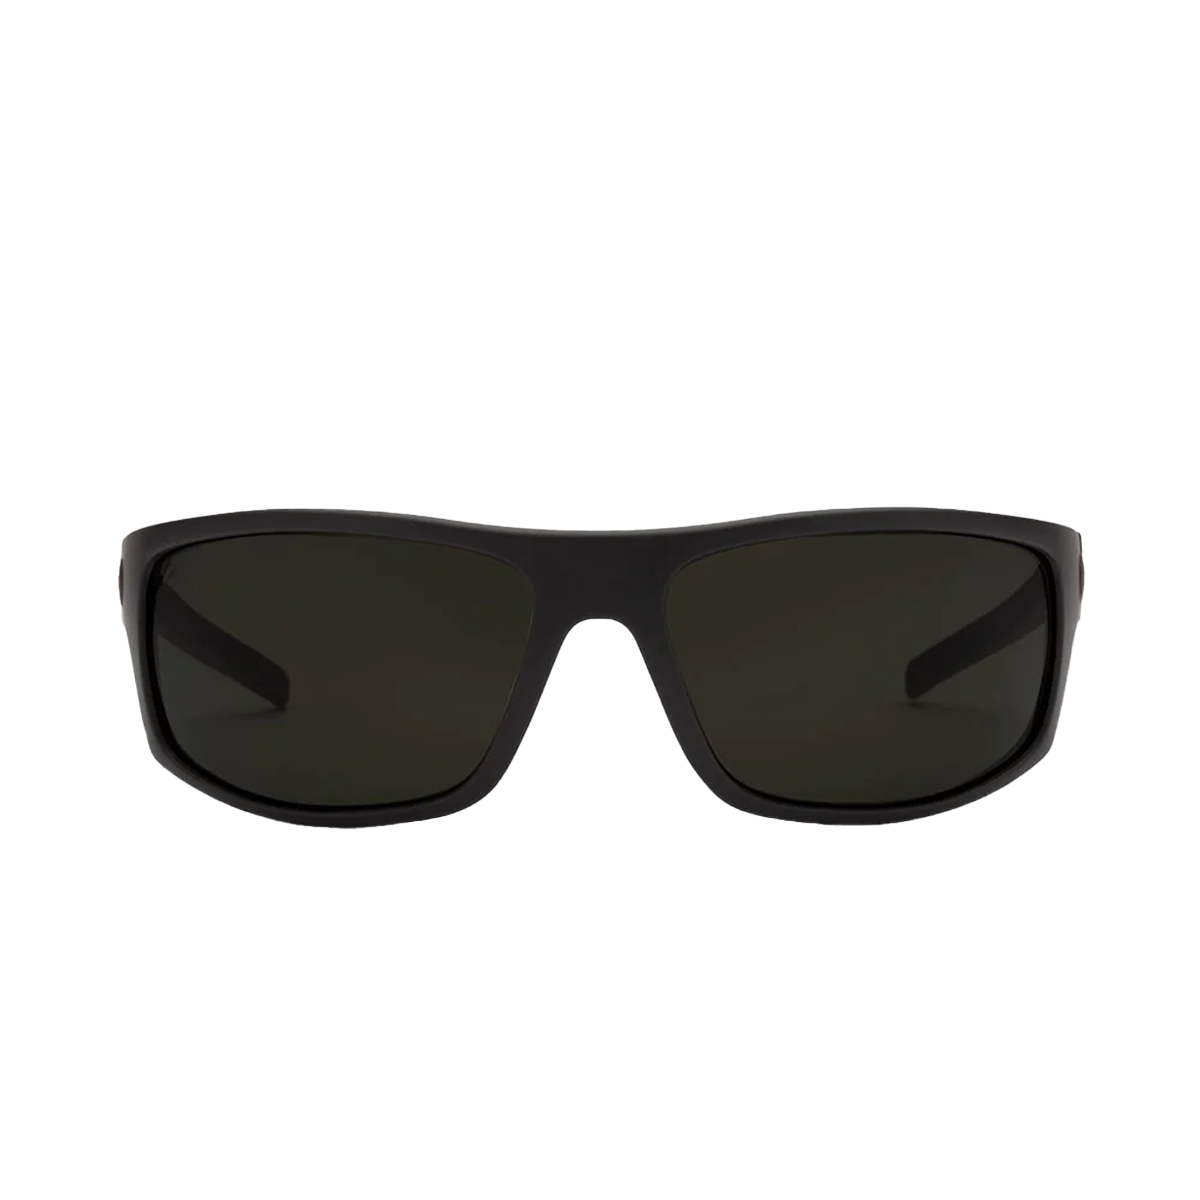 Electric Tech One XL Sport Sunglasses - Matte Black / Polarized Gray